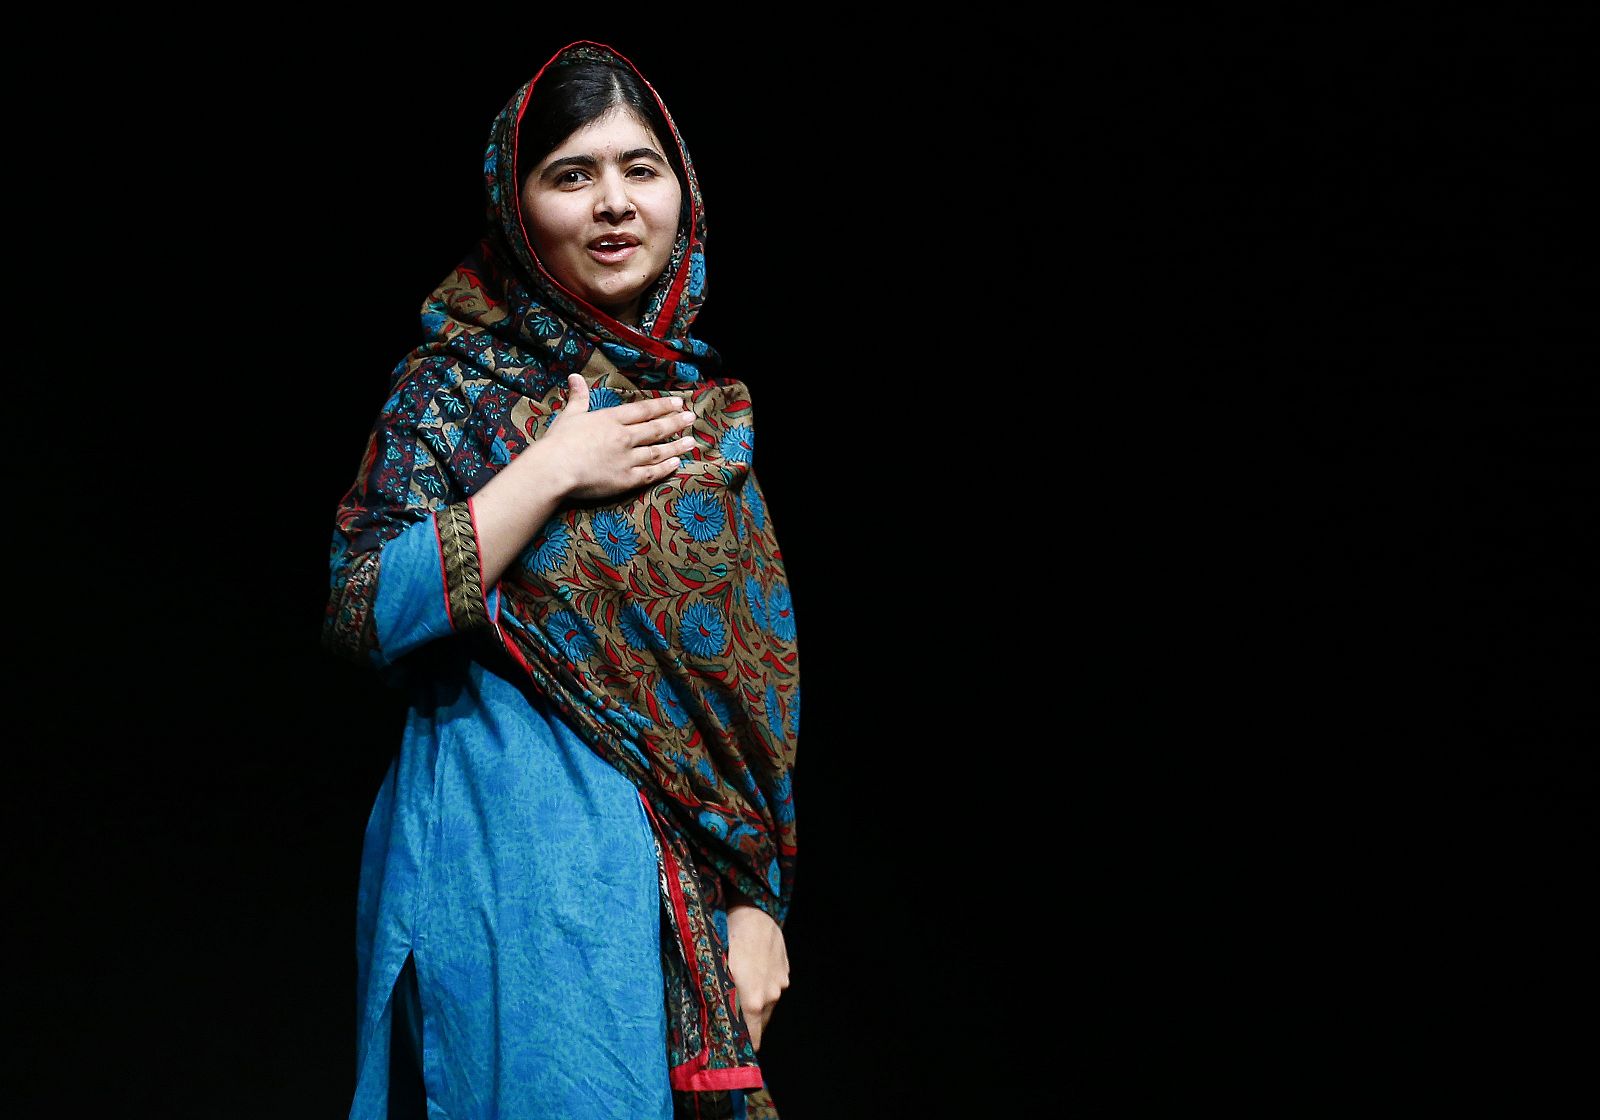 Pakistani schoolgirl Malala Yousafzai speaks at Birmingham library in Birmingham